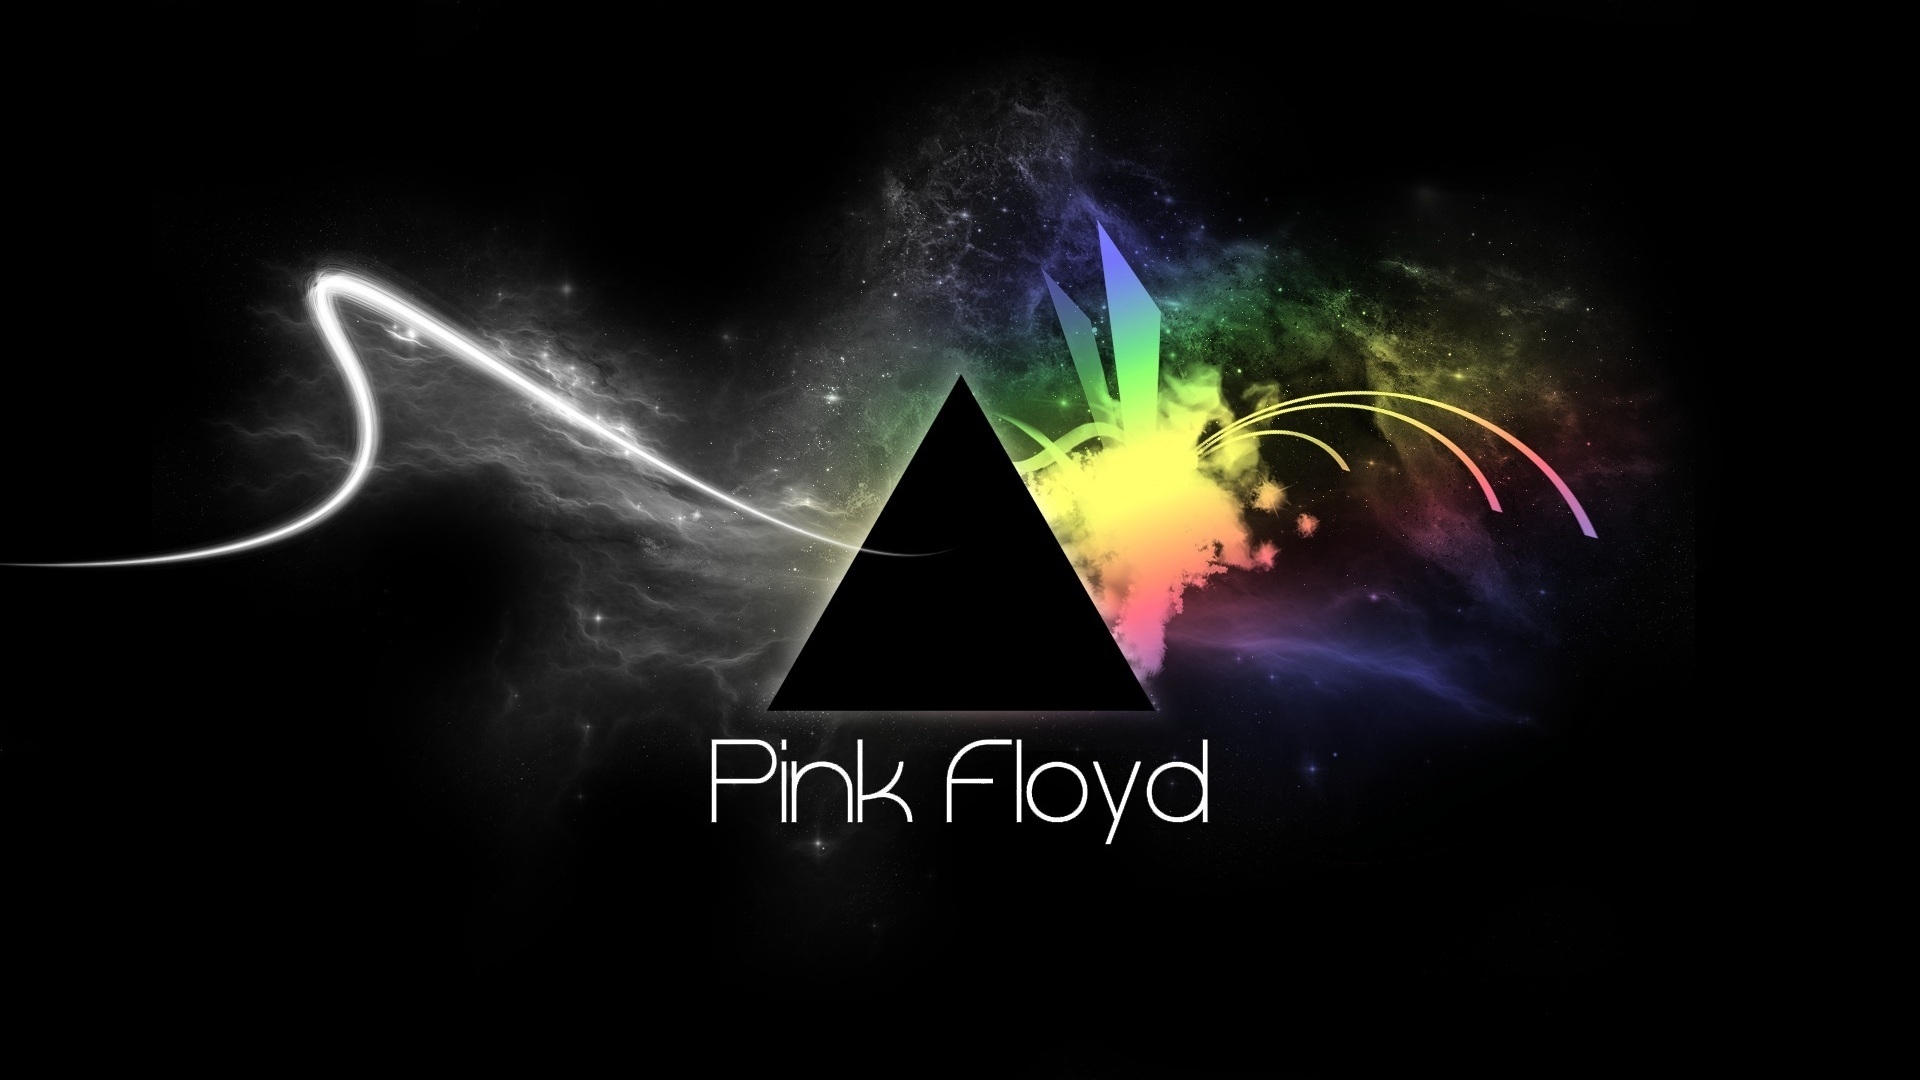 Pink Floyd Logo Design for 1920 x 1080 HDTV 1080p resolution